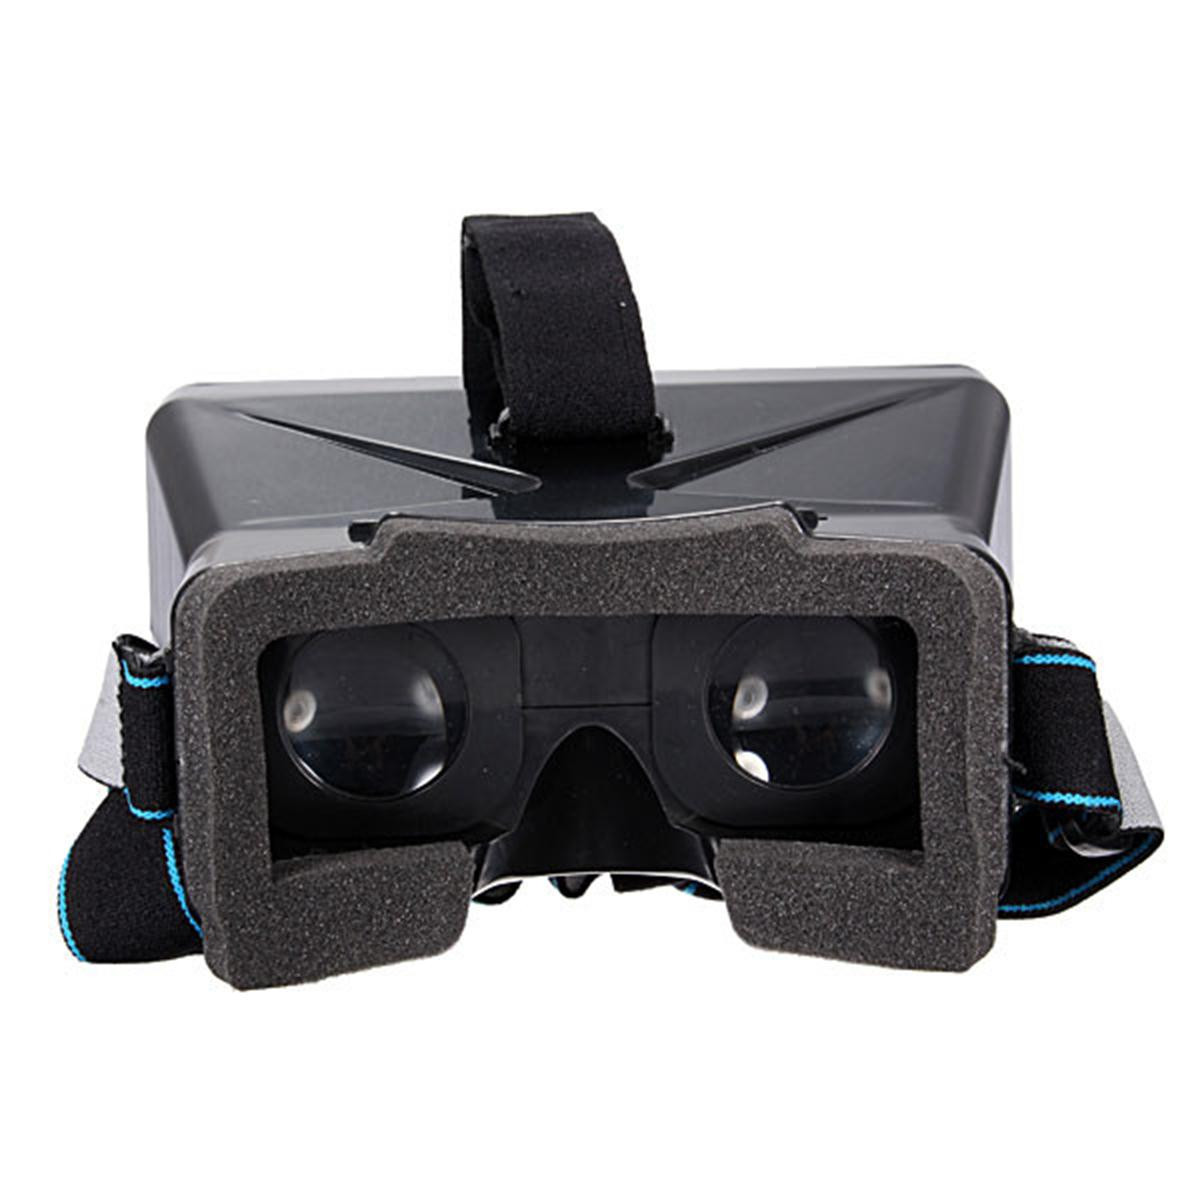 ELEGIANT Virtual Reality VR Glasses for Mobile Phone 3D Glass Wearing Stereoscopic Head Wear 3D Glasses